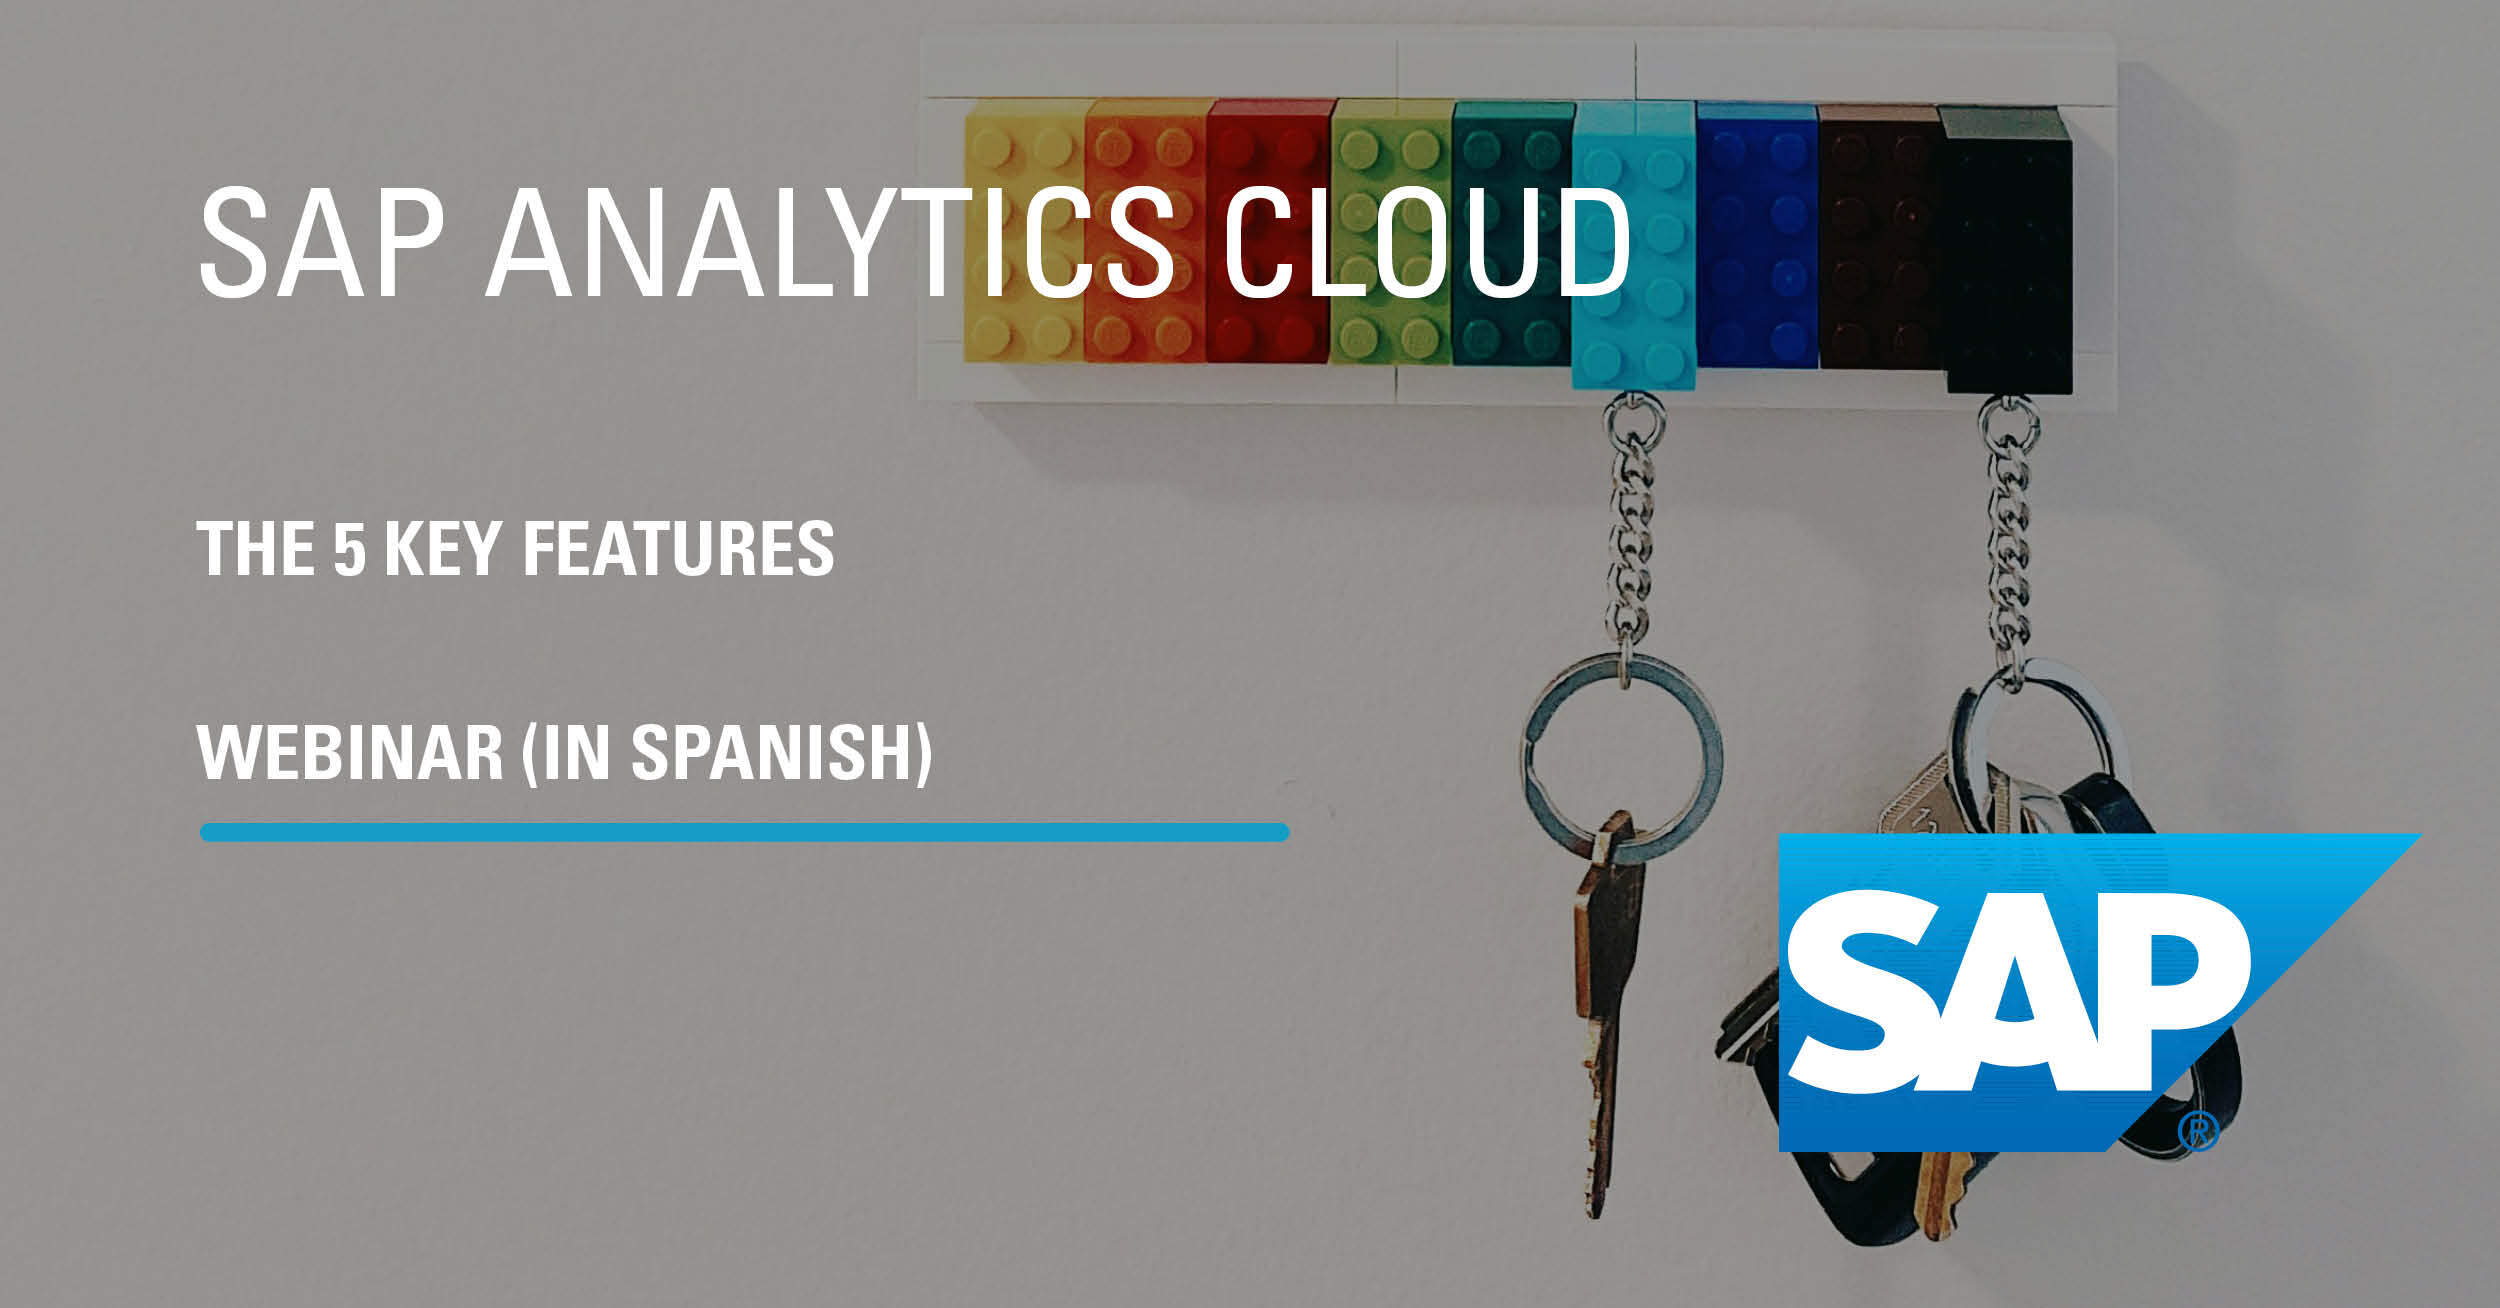 Webinar Sap Analytics Cloud - the 5 key features (in Spanish)